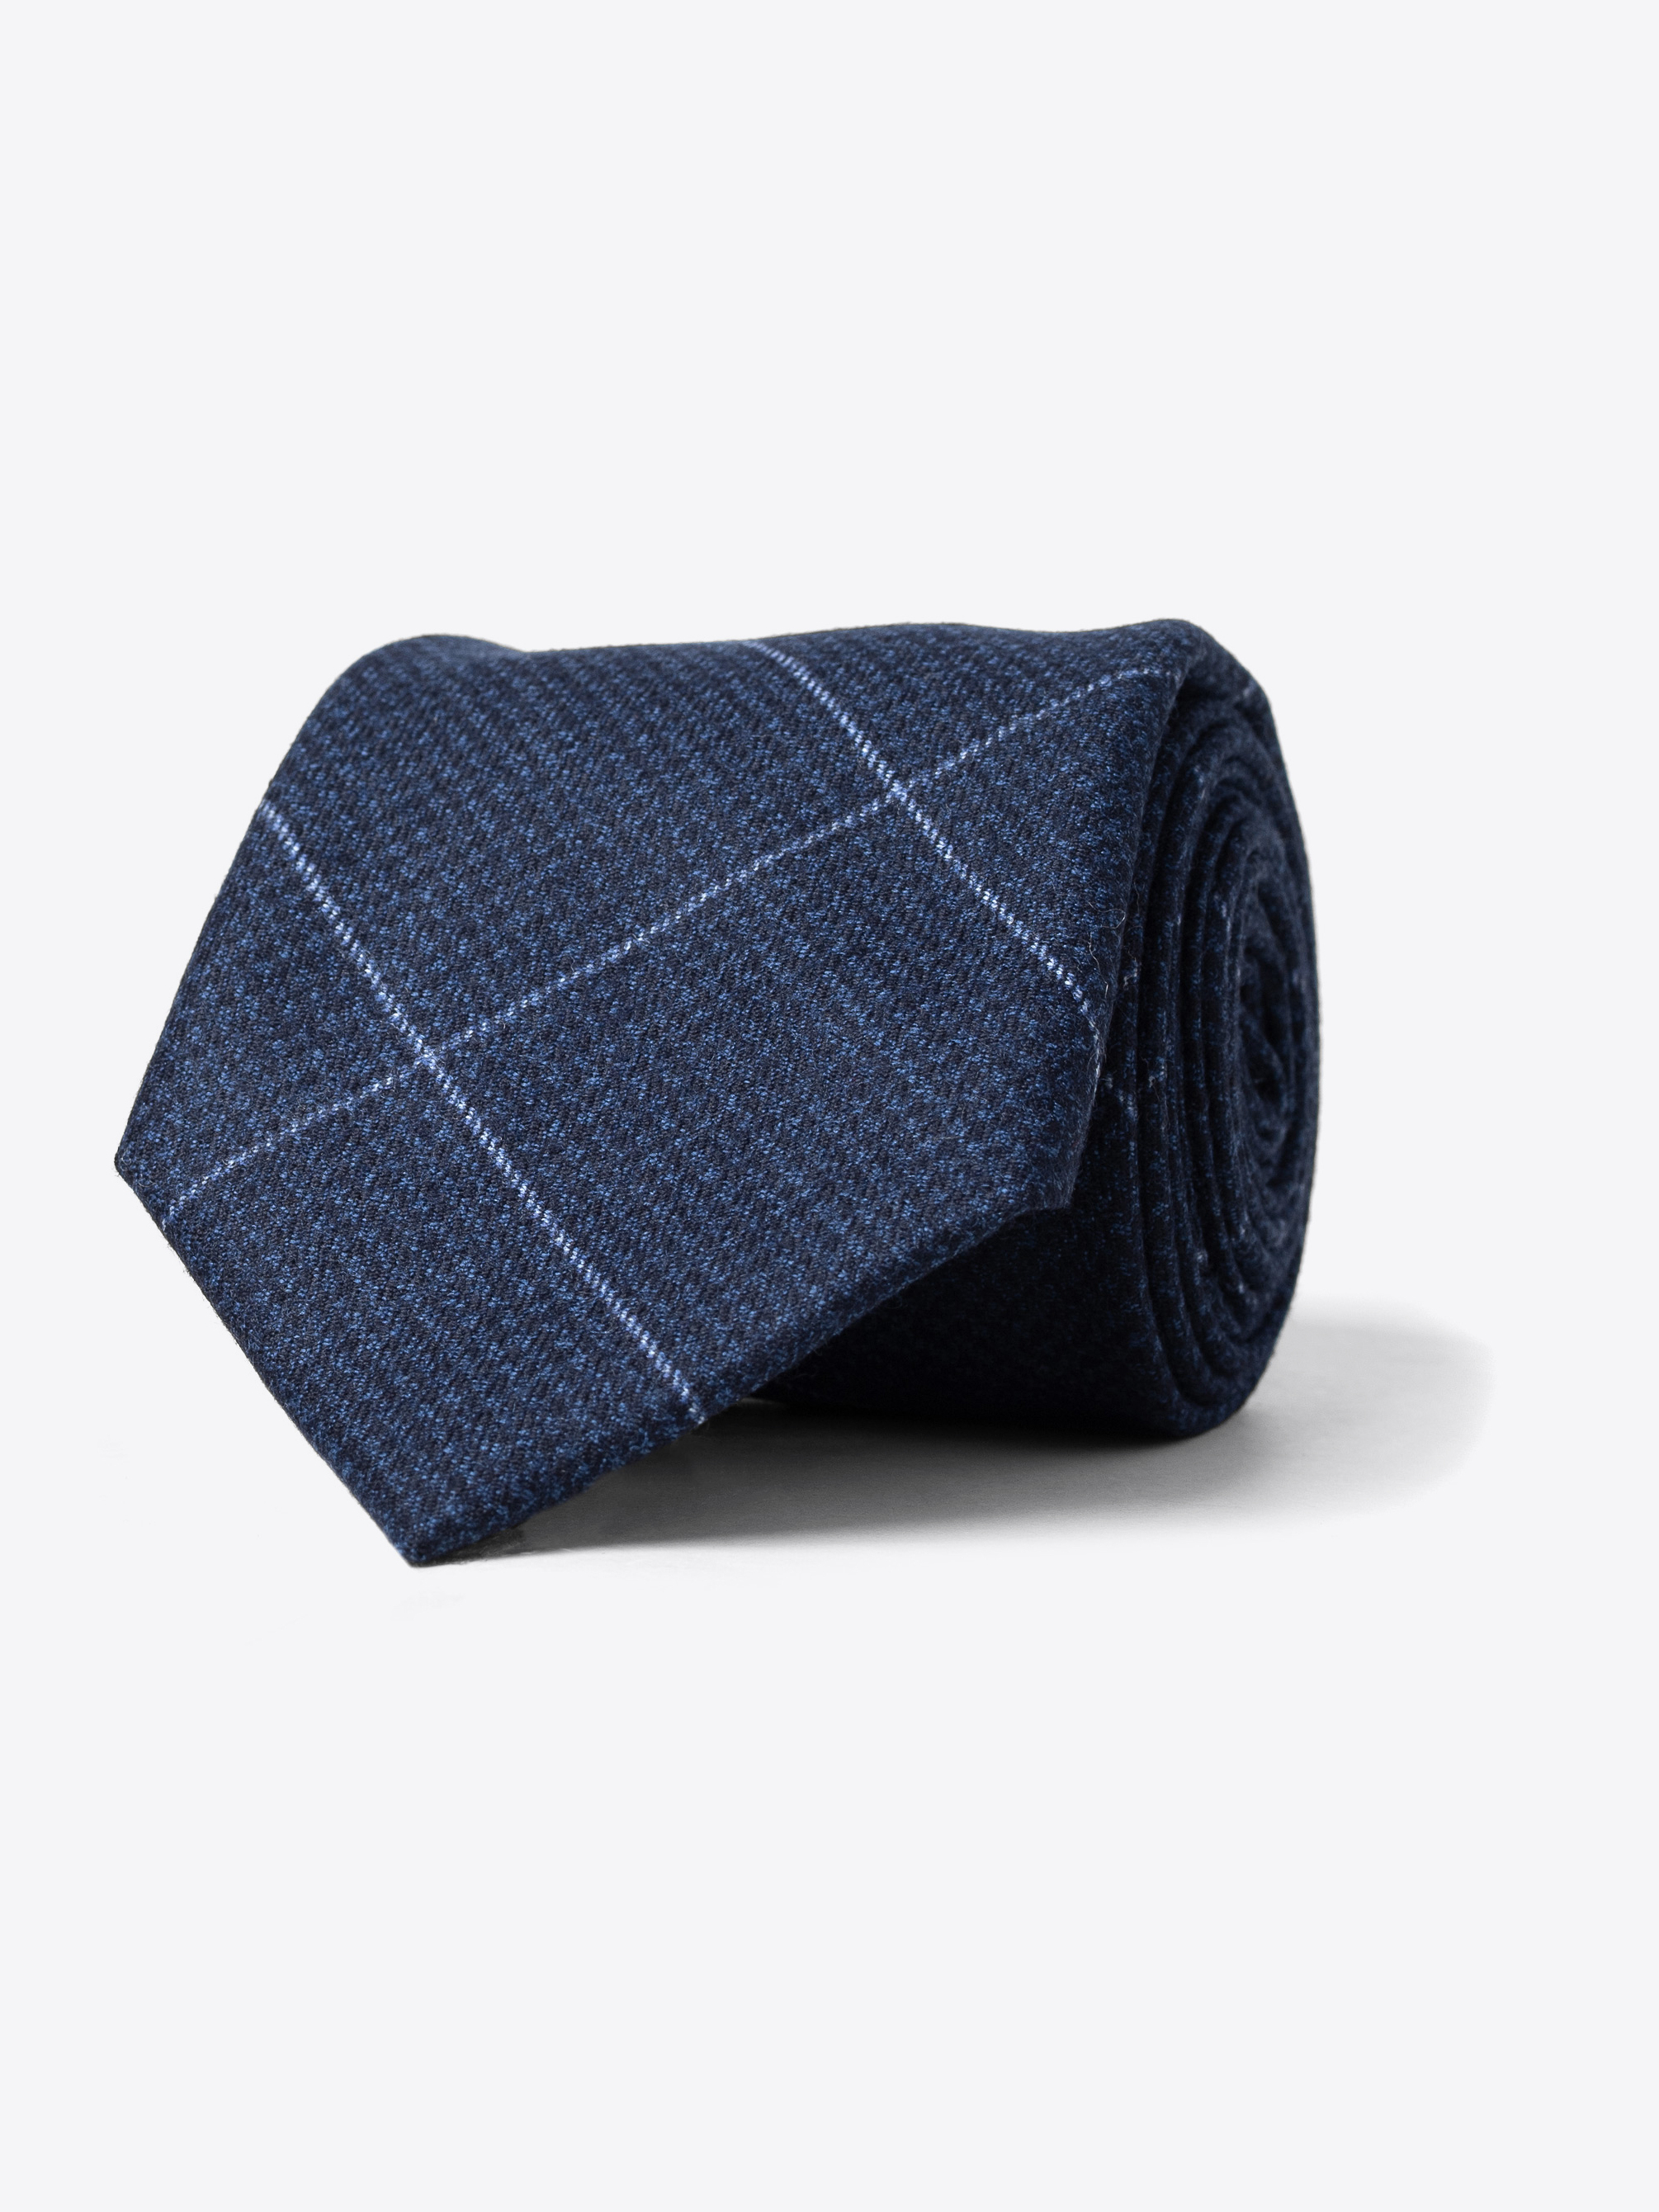 Zoom Image of Navy Windowpane Wool Tie